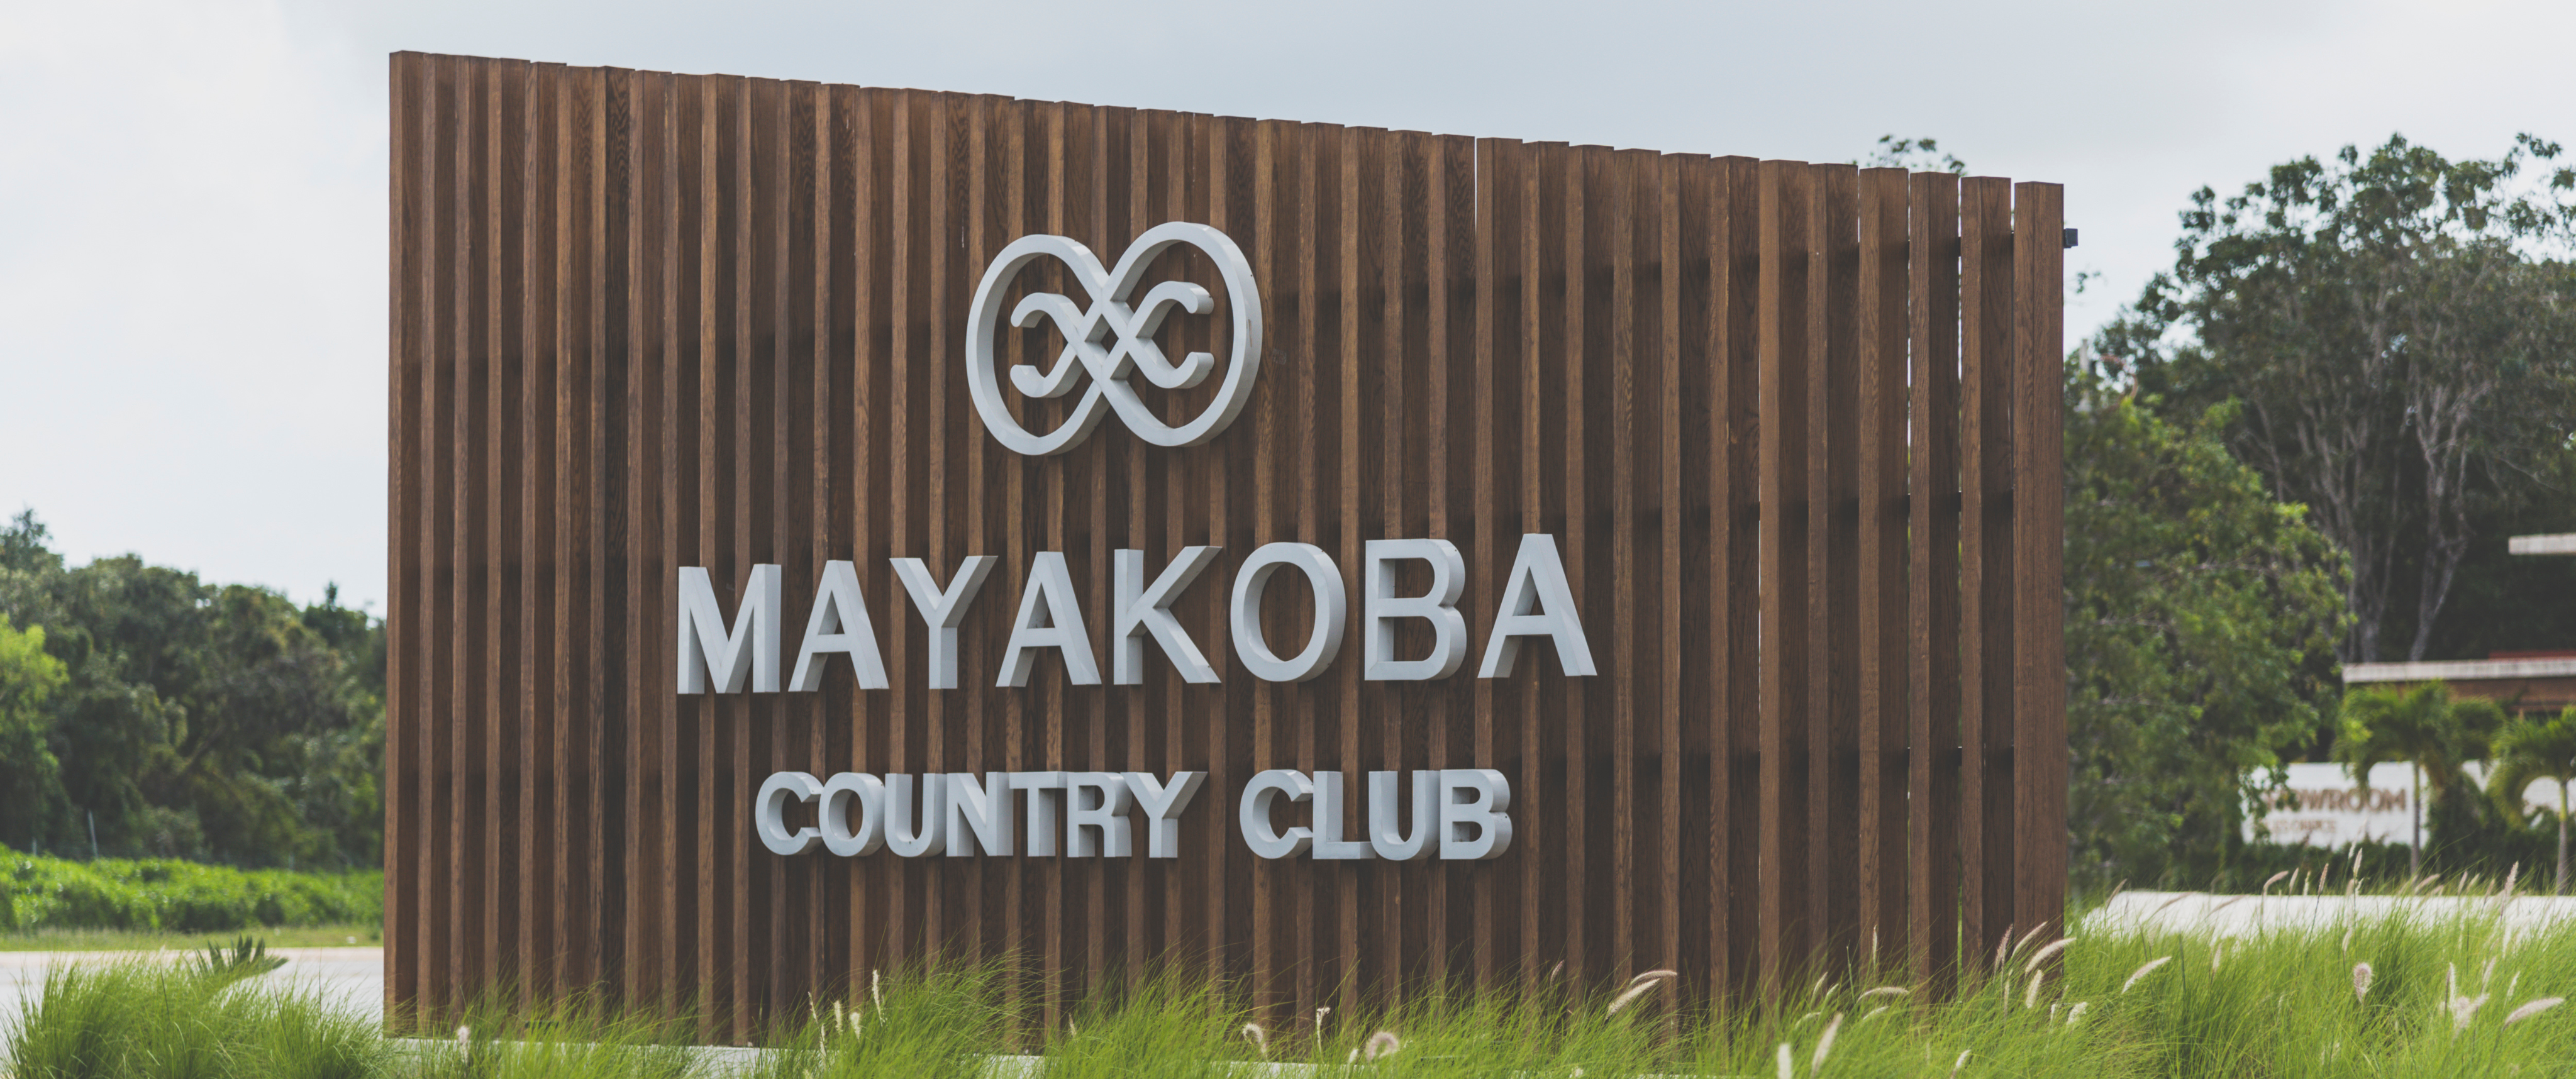 mayakoba-country-club (2)